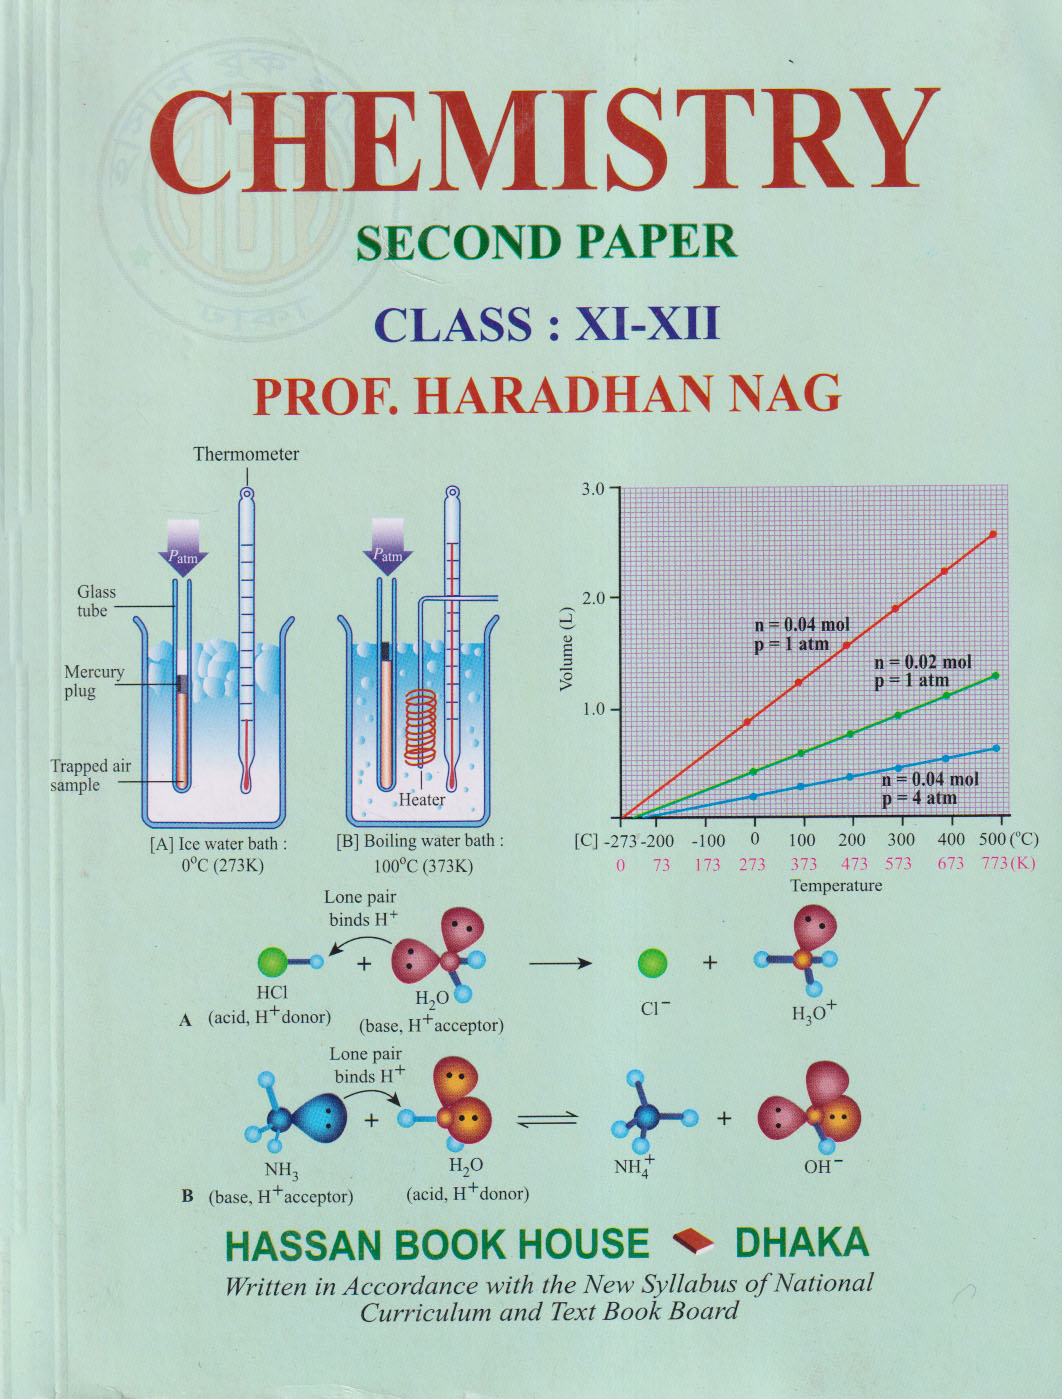 Chemistry Second Paper (XI-XII Classes) - English Version (পেপারব্যাক)